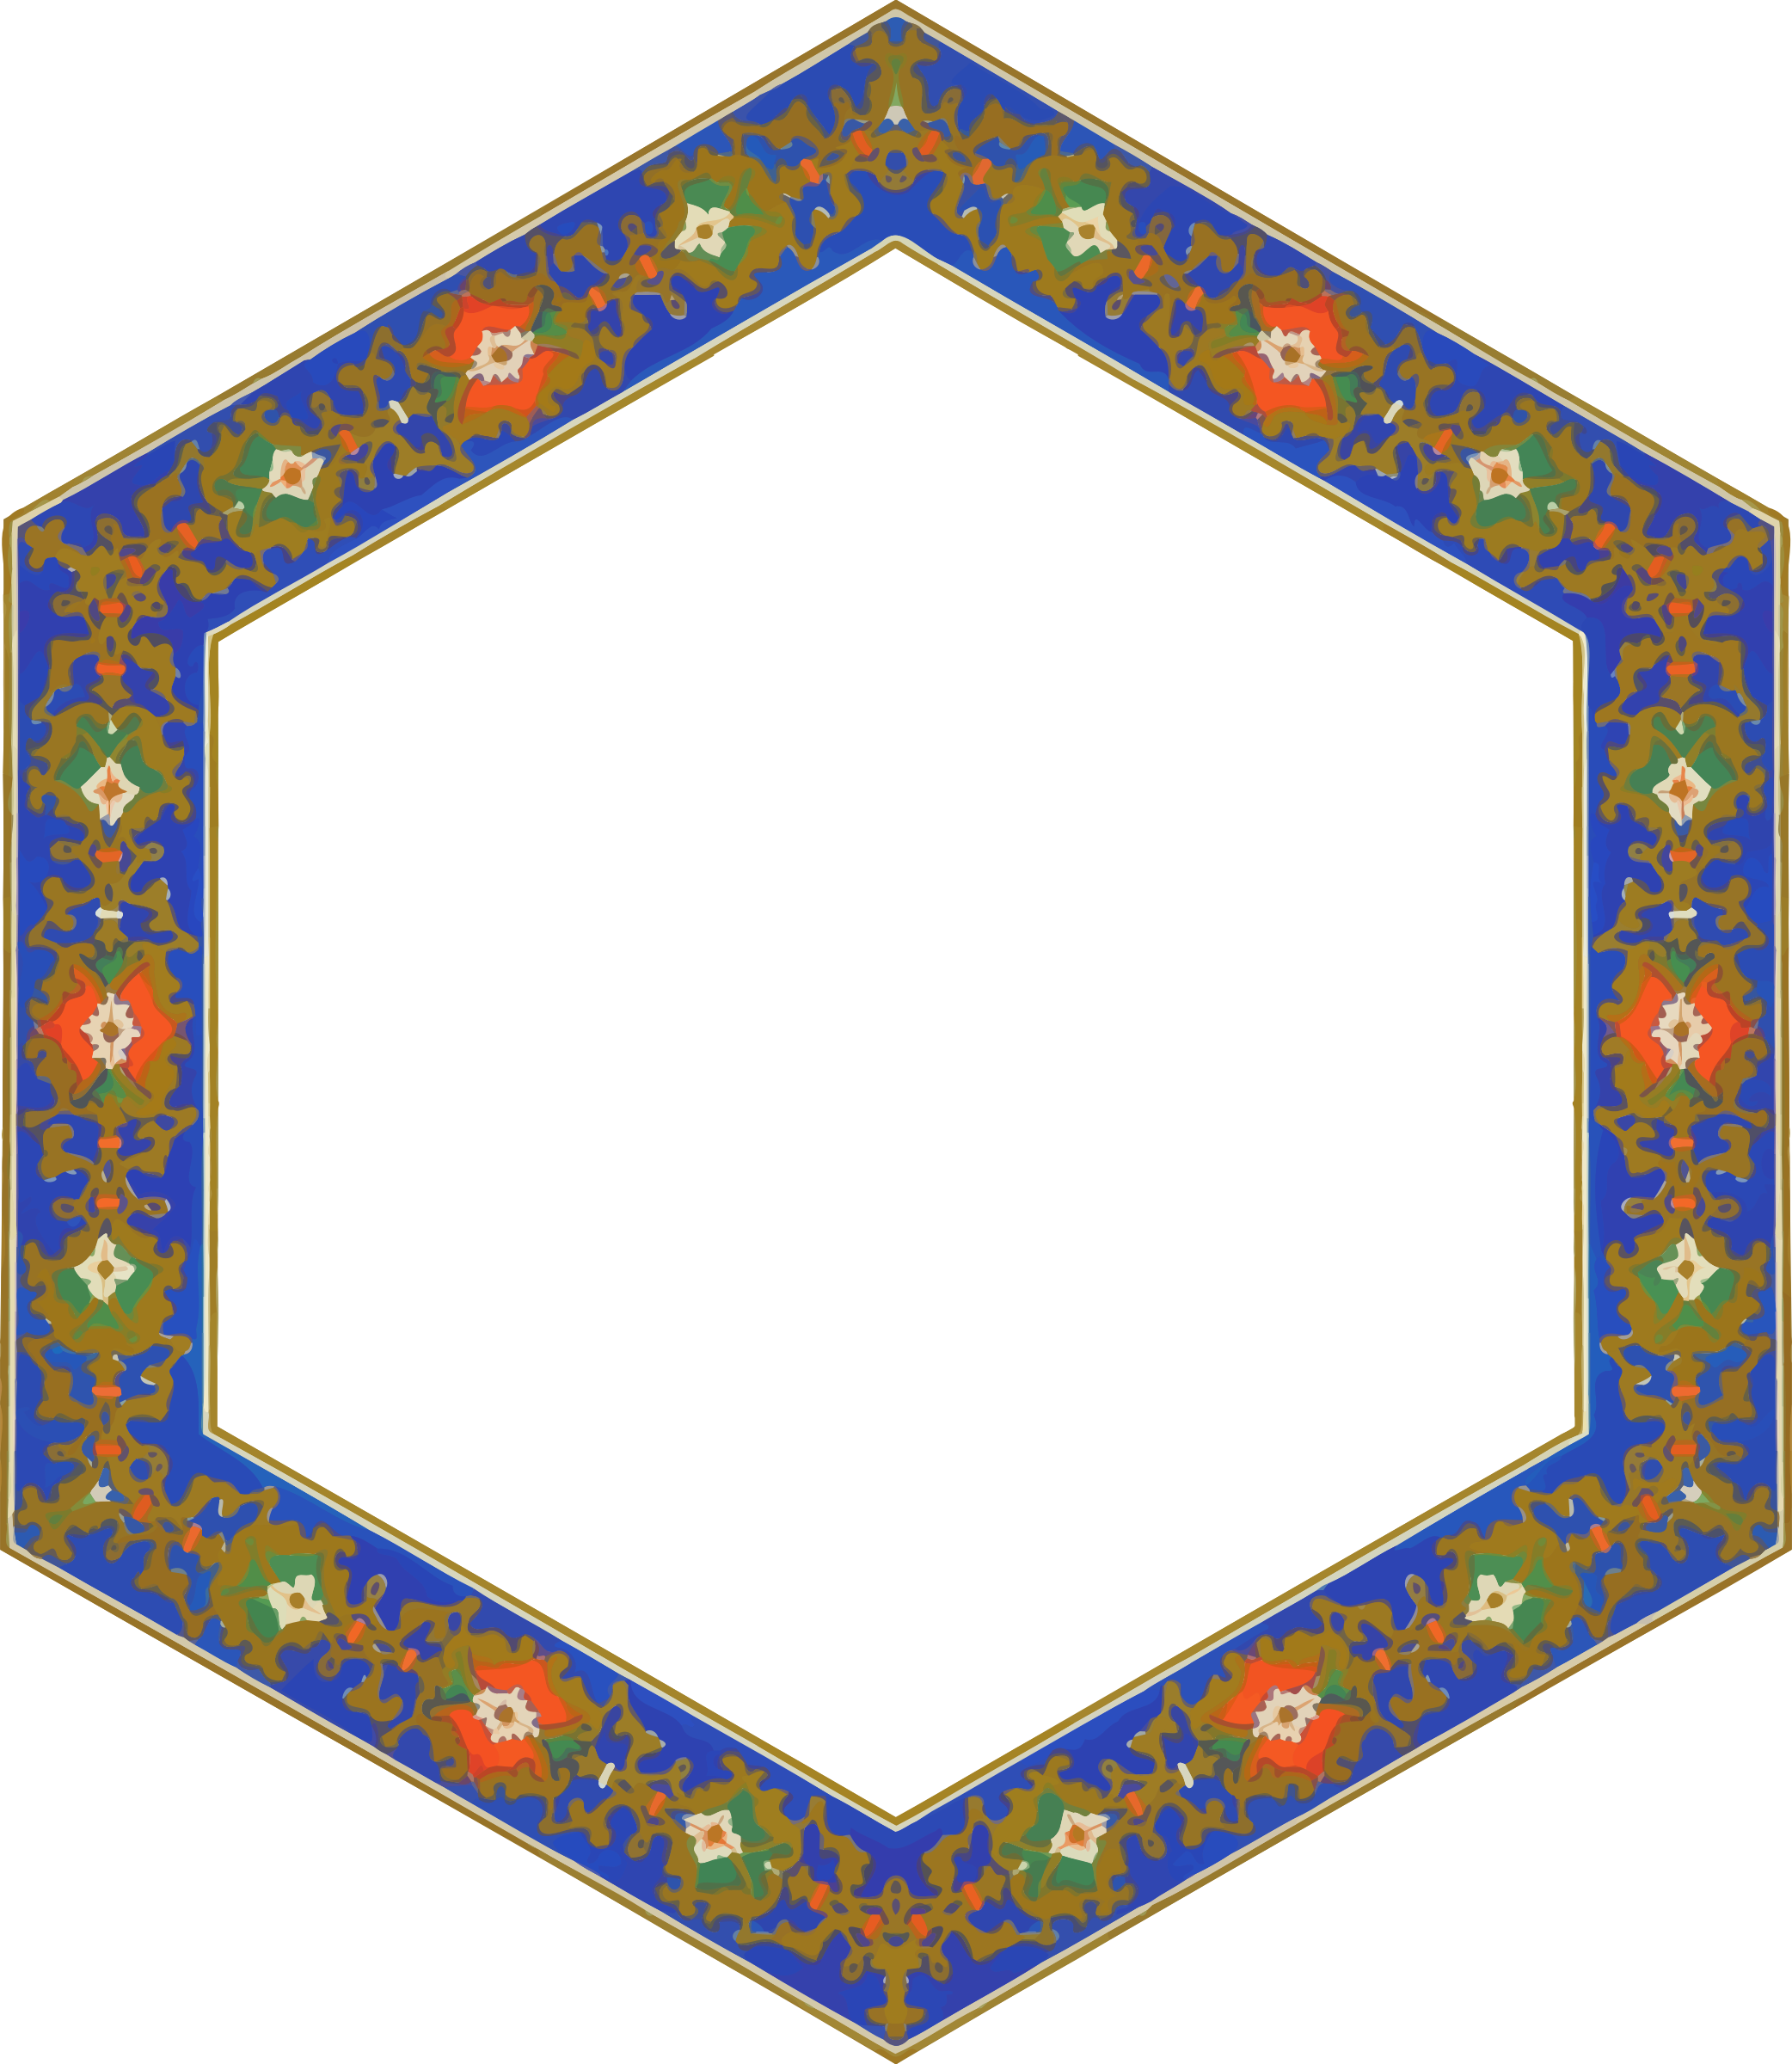 Big Image - Hexagonal Frame Png (2084x2400)